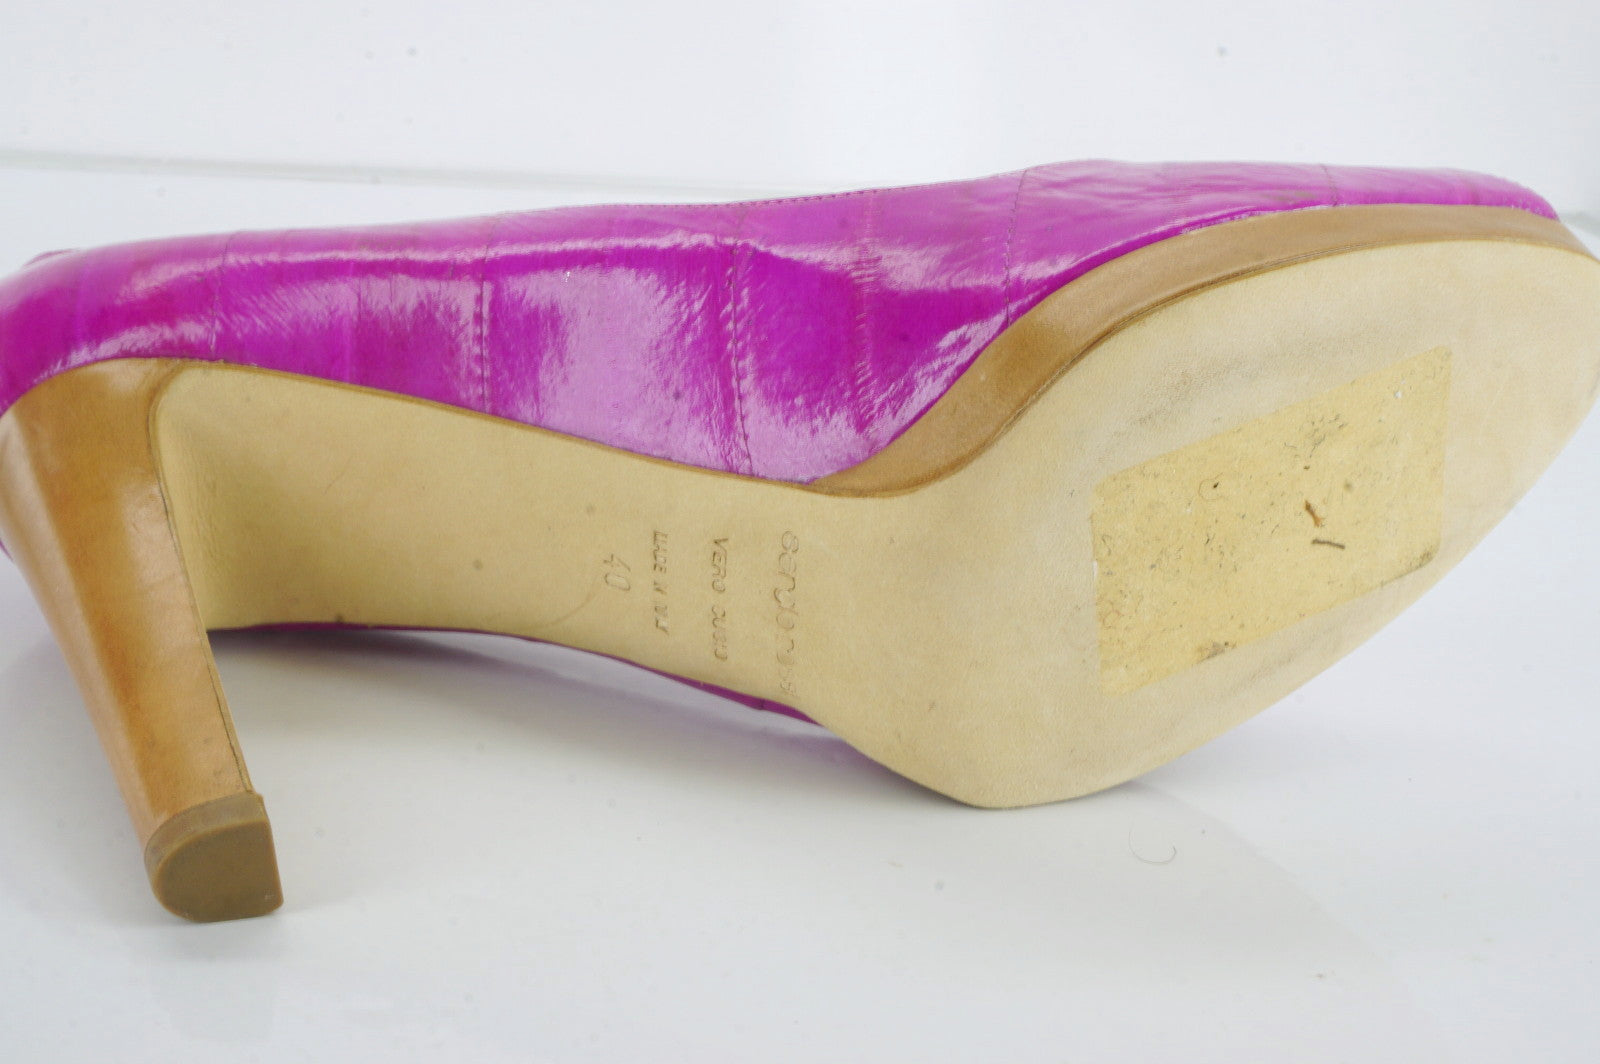 Sergio Rossi Pink Eel Skin Leather 'Peep' Open Toe Pumps SZ 40 10 NEW $695